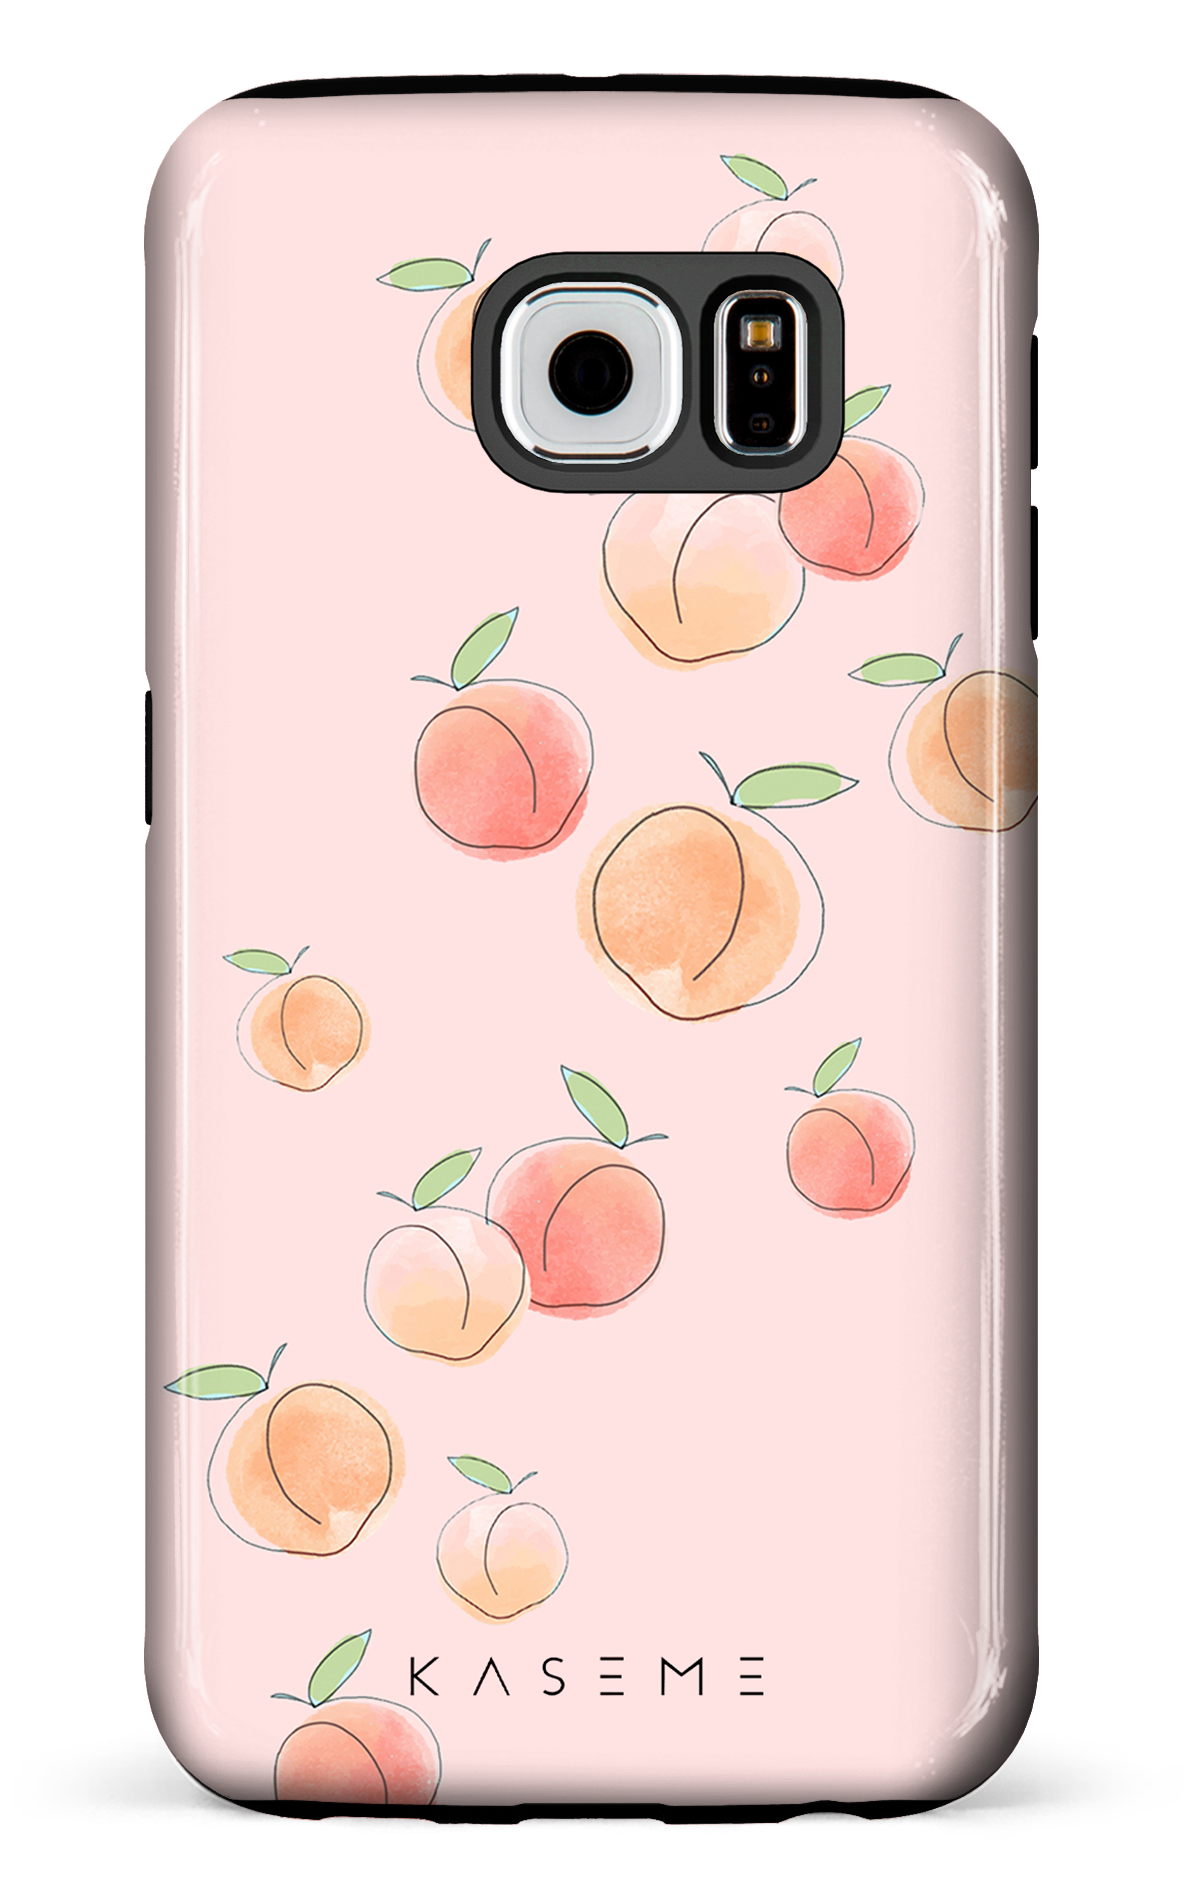 Peachy pink - Galaxy S6